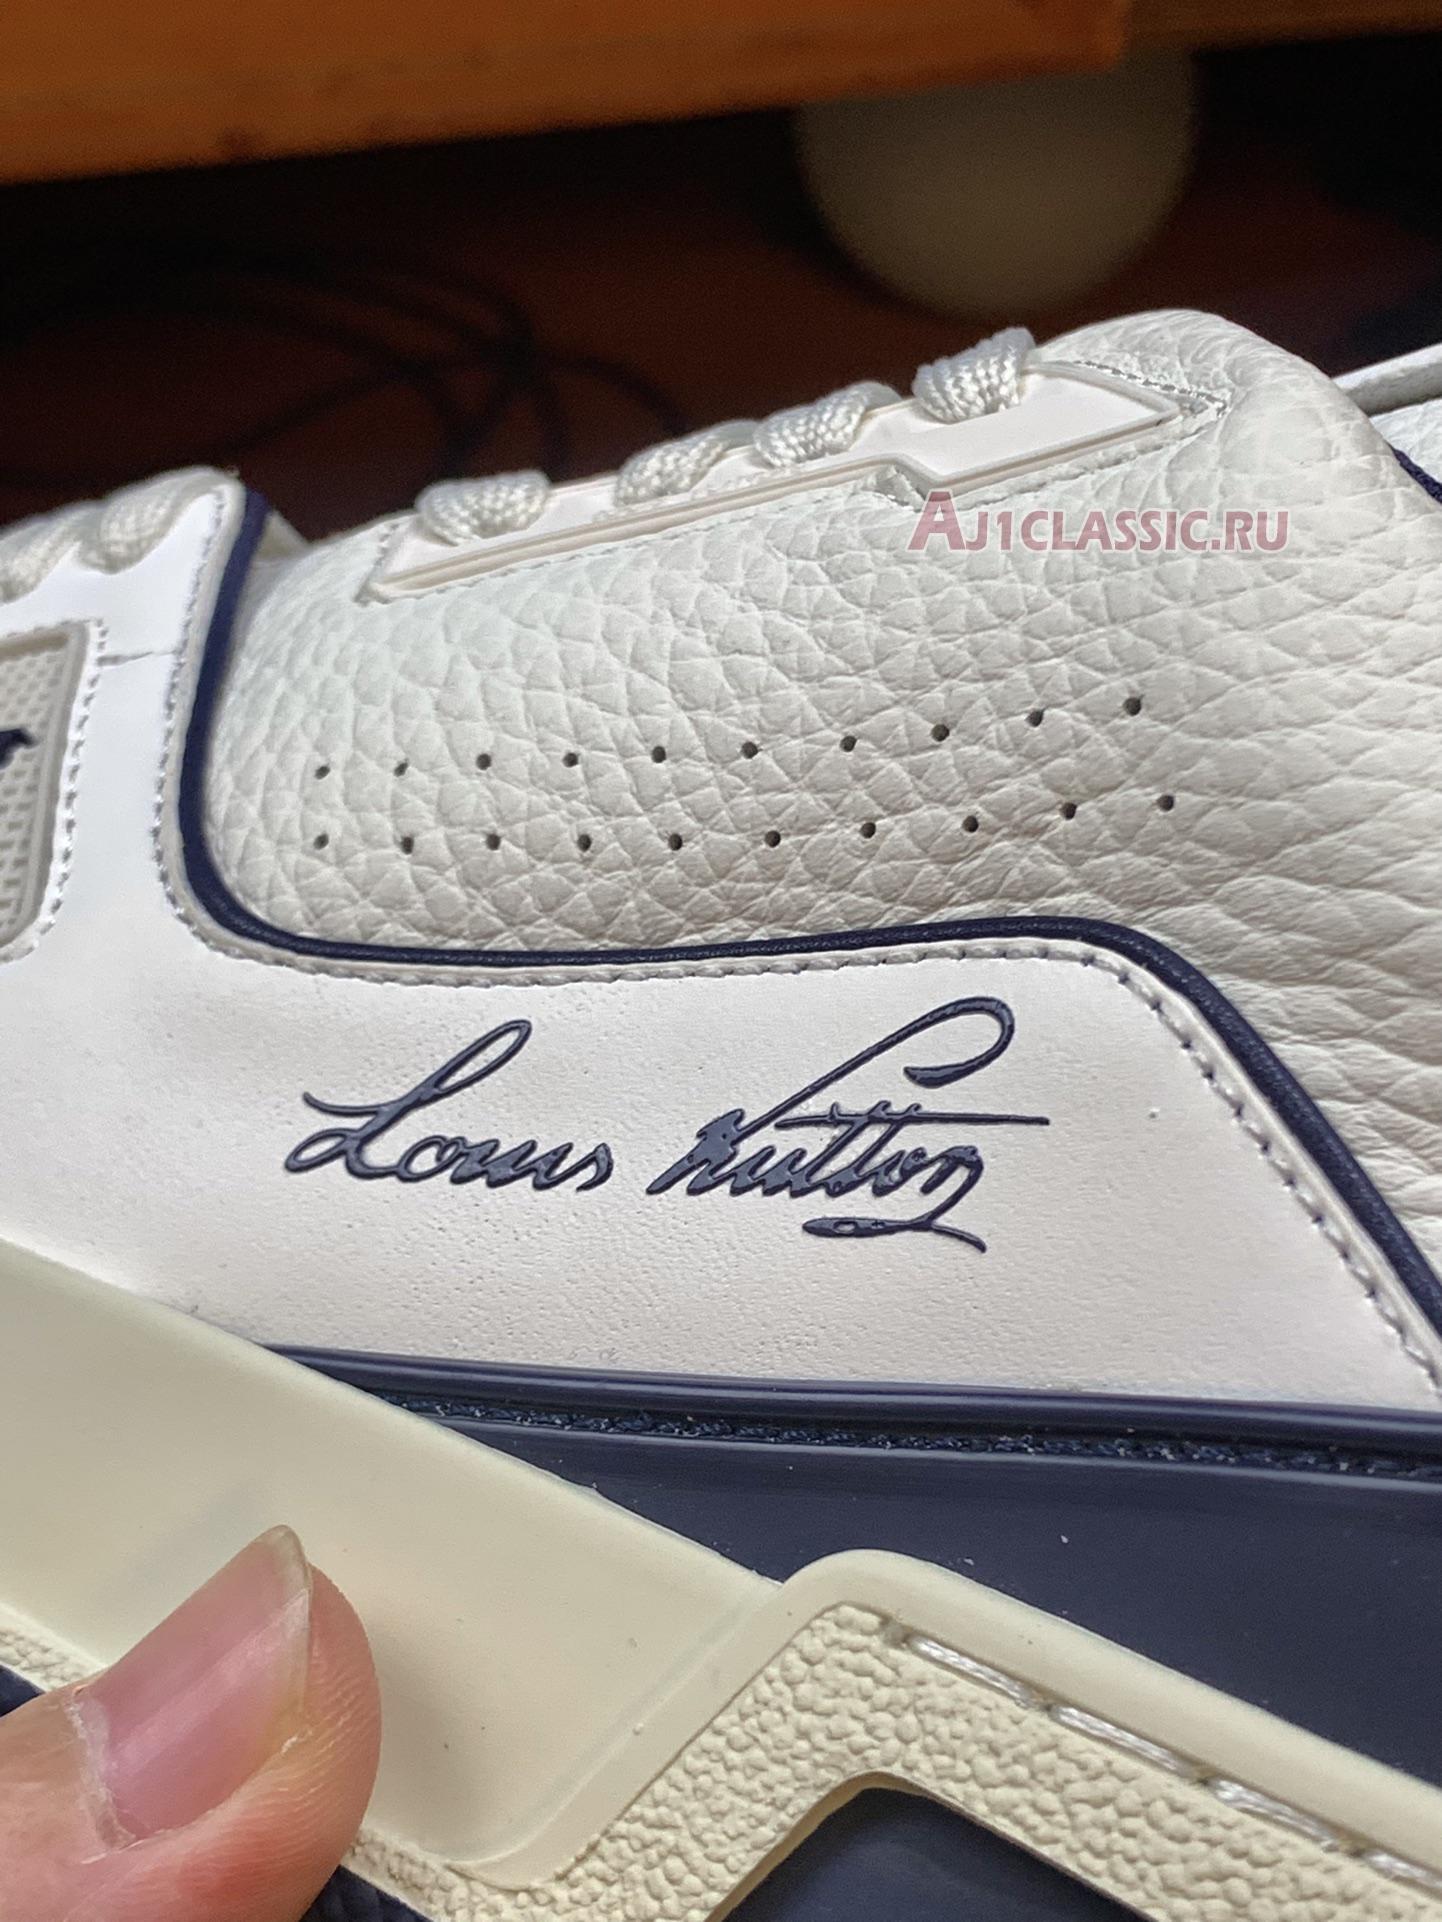 Louis Vuitton Trainer Low "#54 Signature - White Marine" 1ABNIL